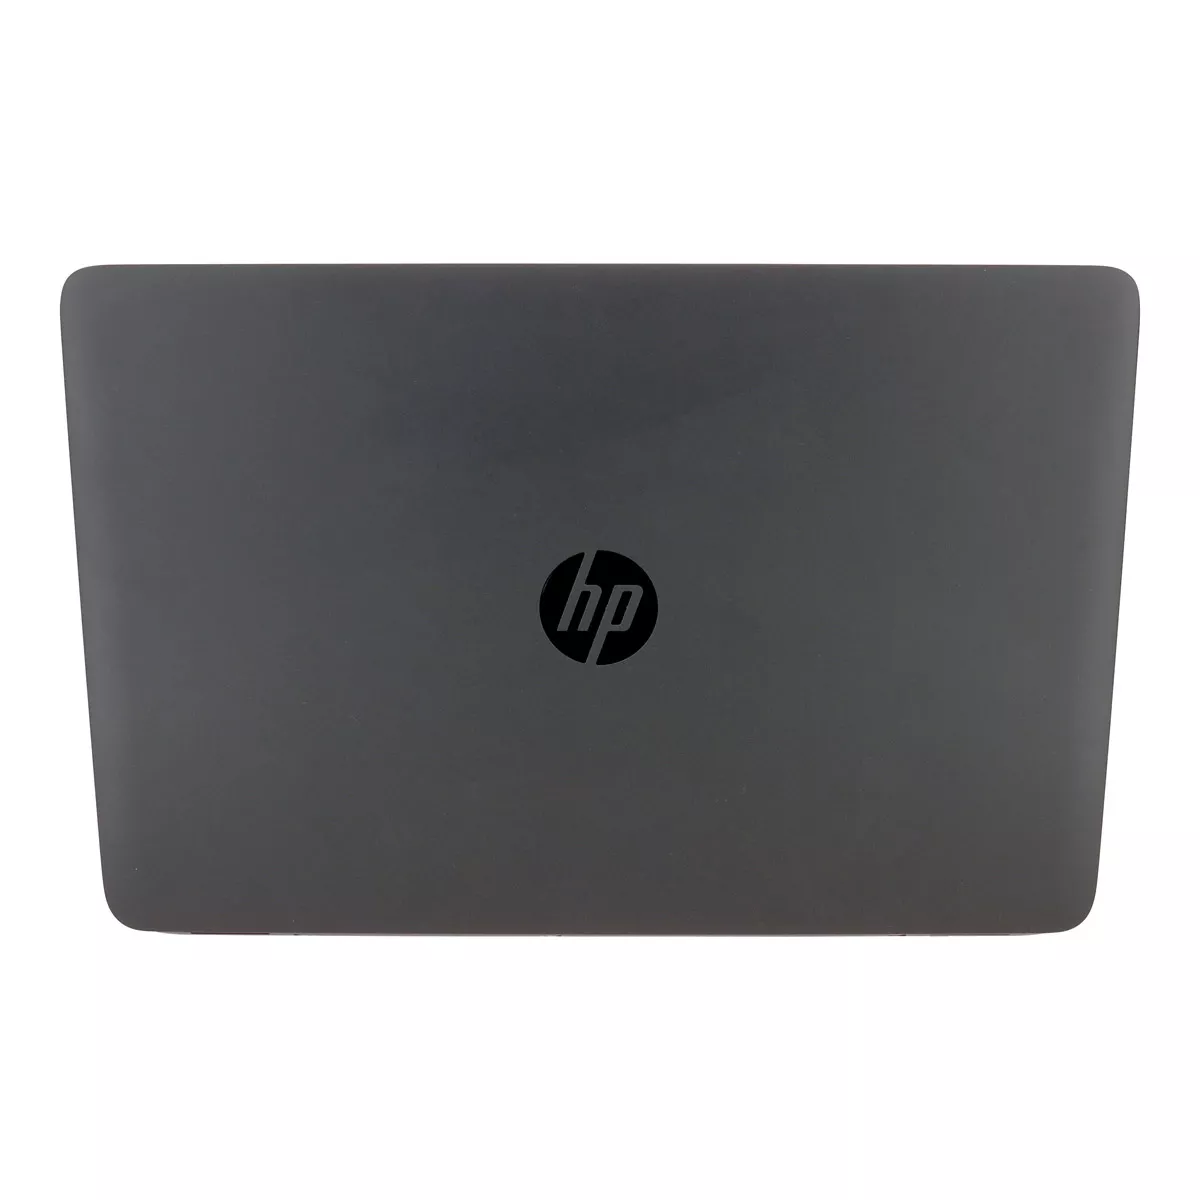 HP EliteBook 850 G2 Core i5 5300U Full-HD 240 GB SSD Webcam A+